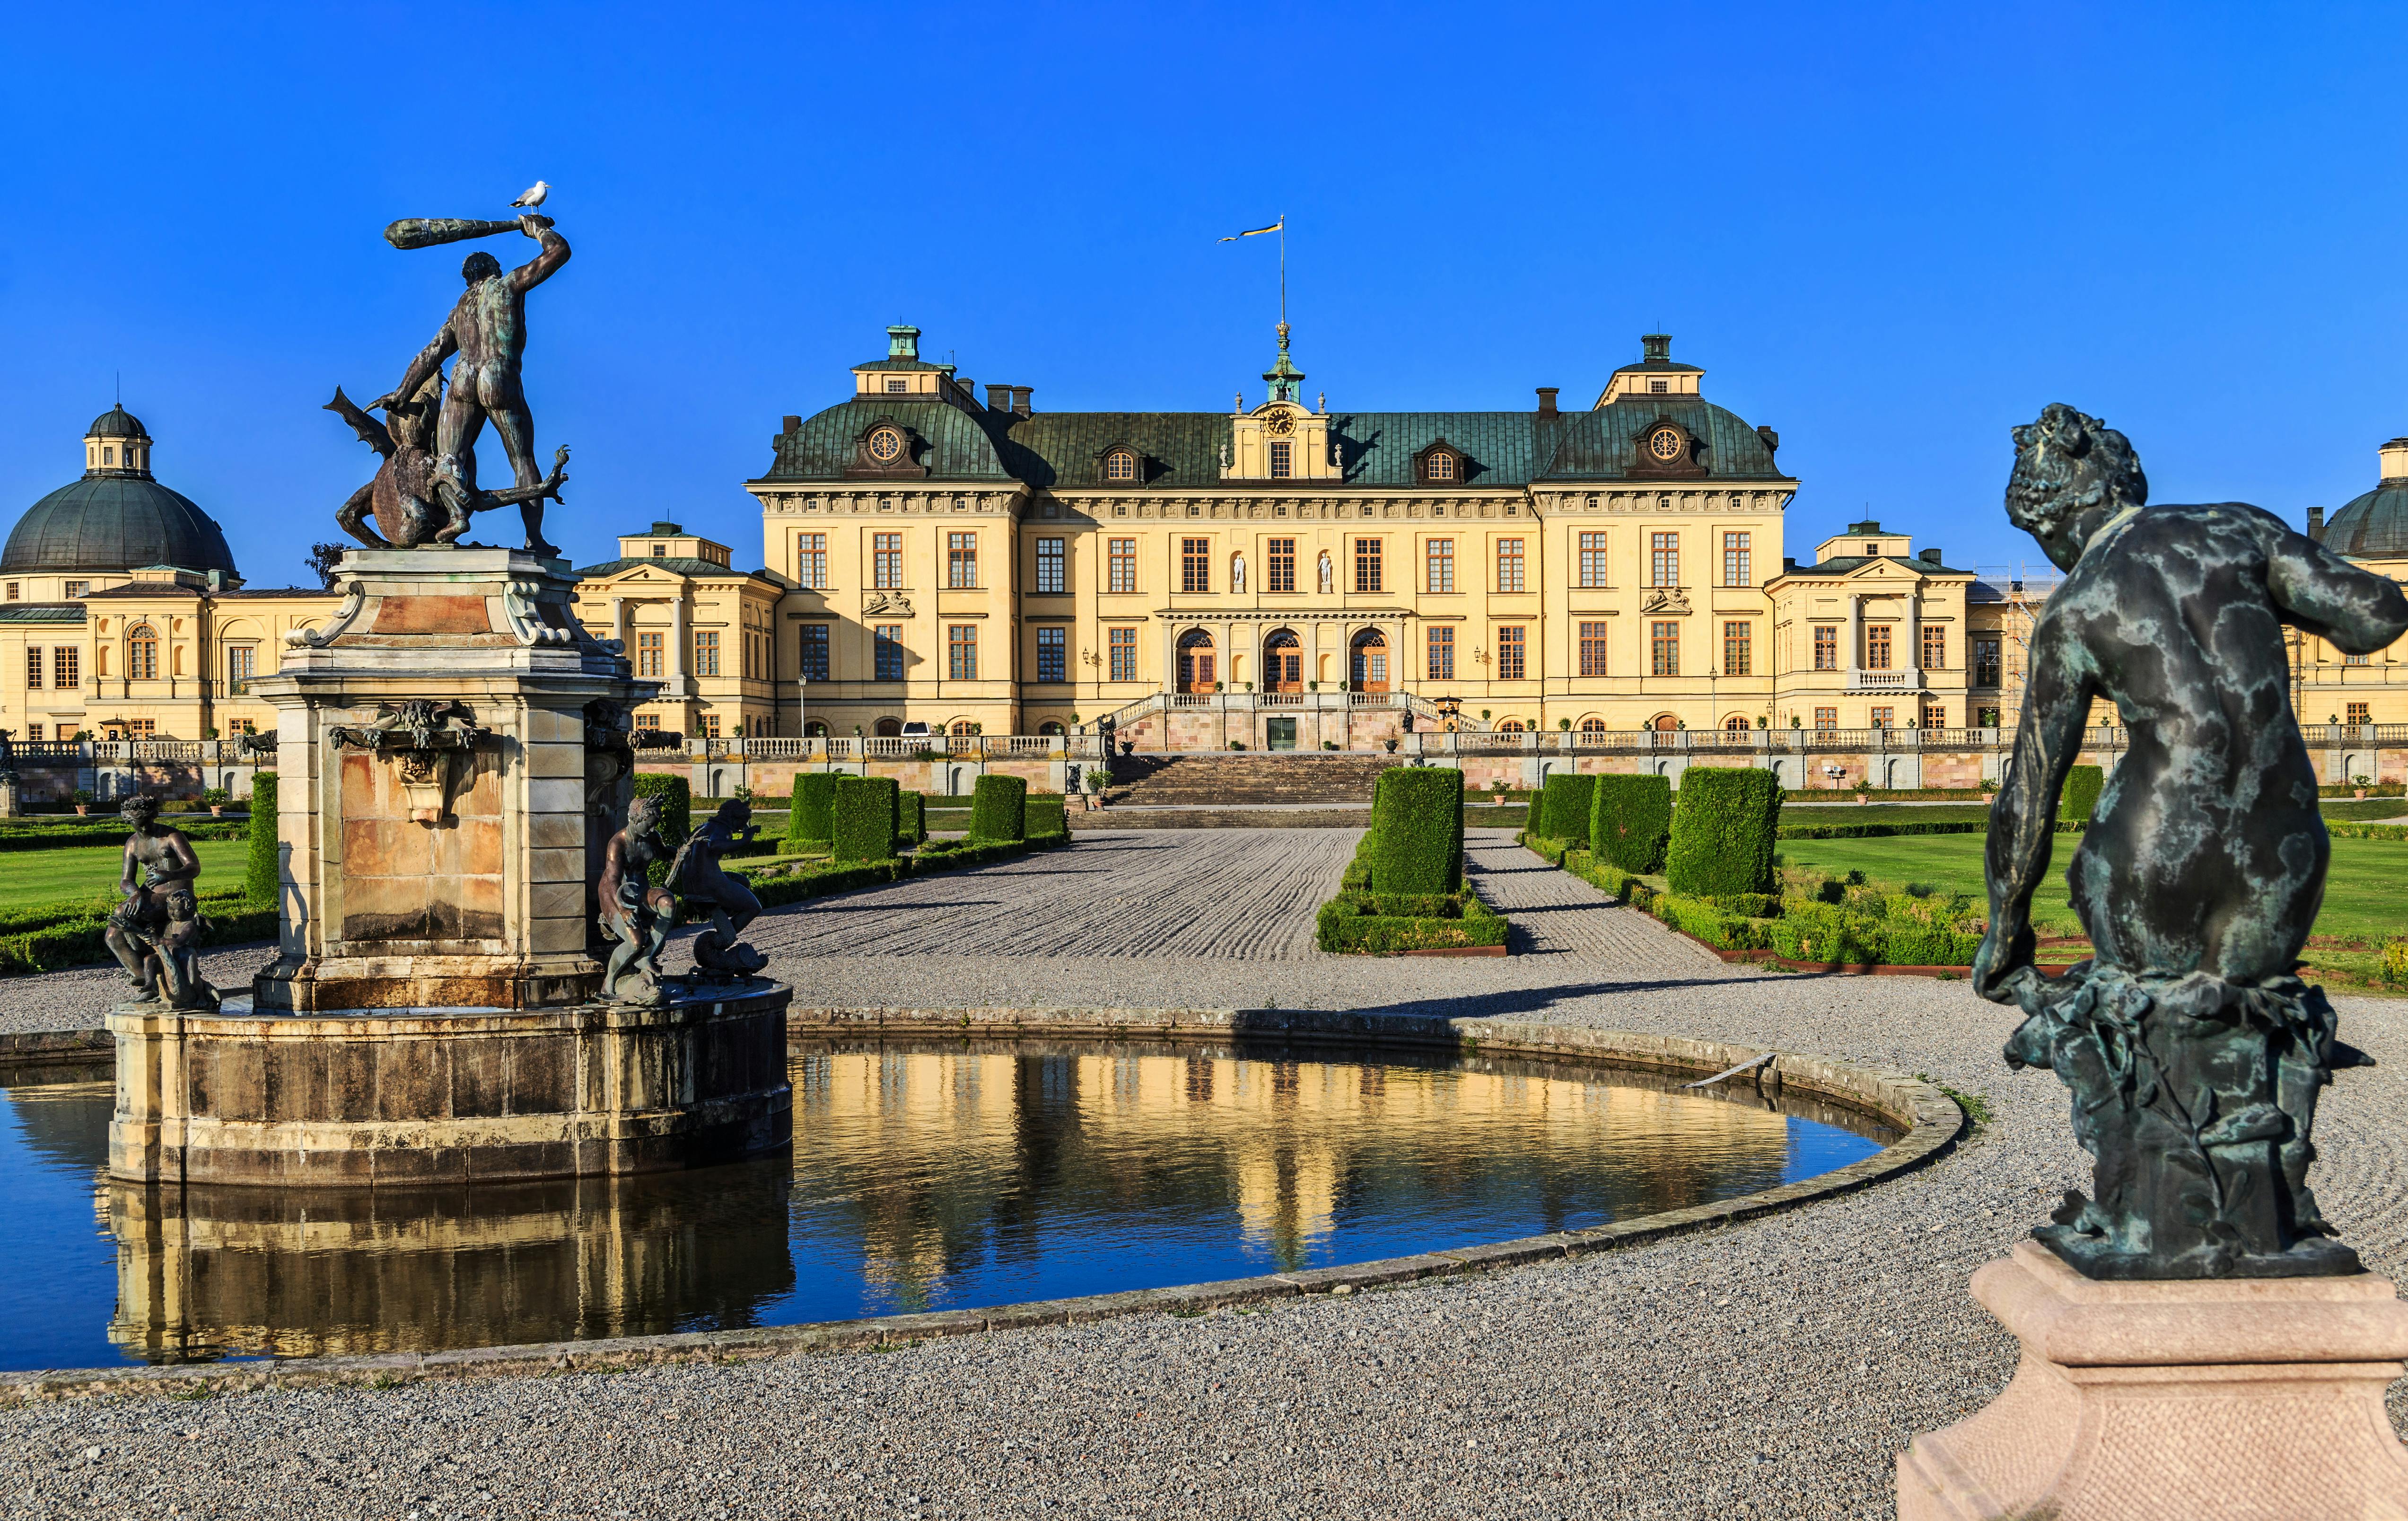 Halvdagsutflukt i Stockholm med Drottningholms slott